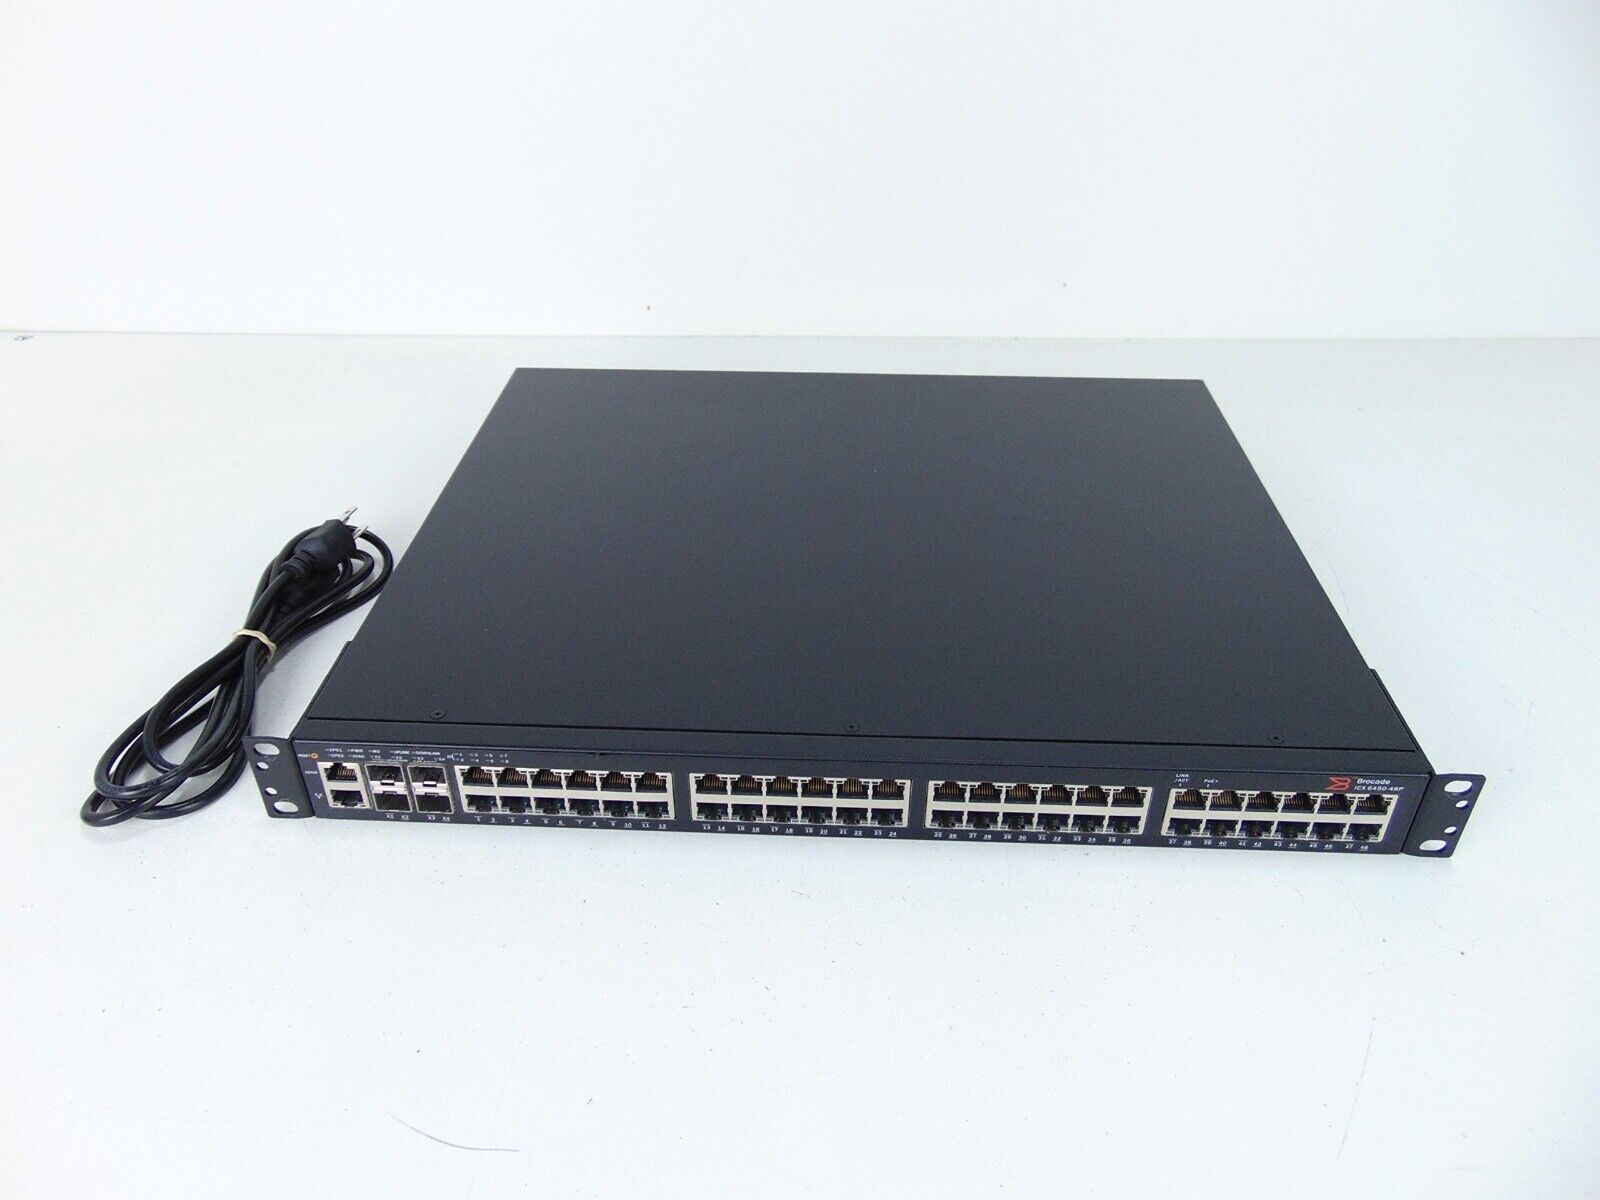 Brocade ICX6450-48P 48x 1Gb 4x 1/10 Gb Ports Gigabit POE+ 2x 10G SFP+ Ports